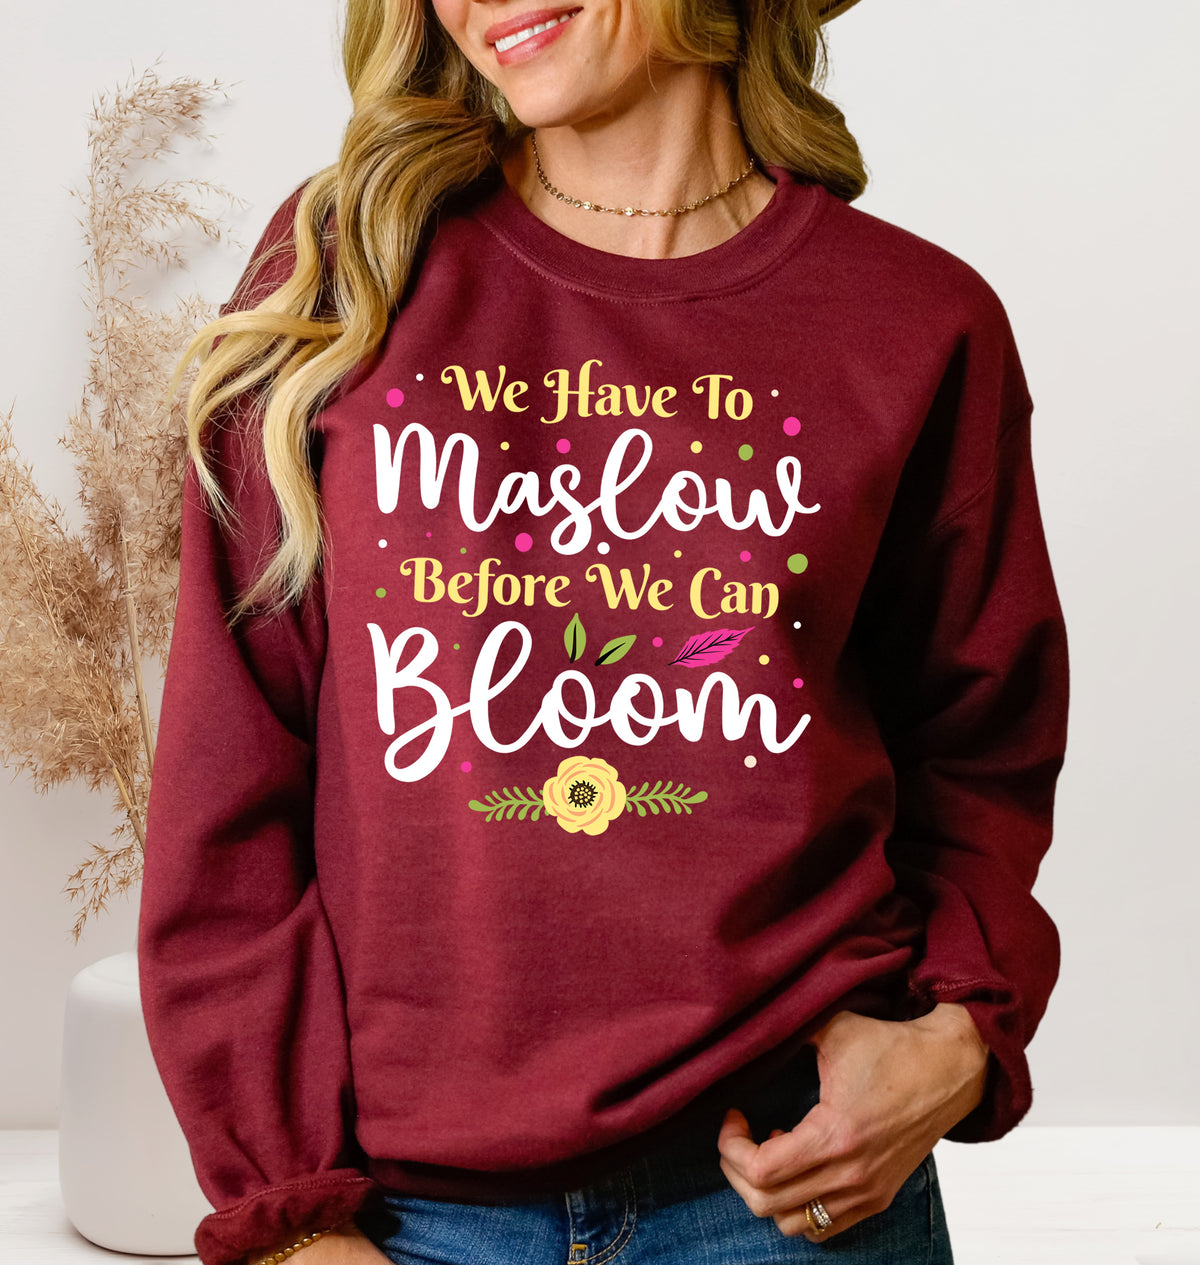 Maslow Before Bloom Funny Psychology Shirt | School Counselor Psychologist Gift | Unisex Crewneck Sweatshirt